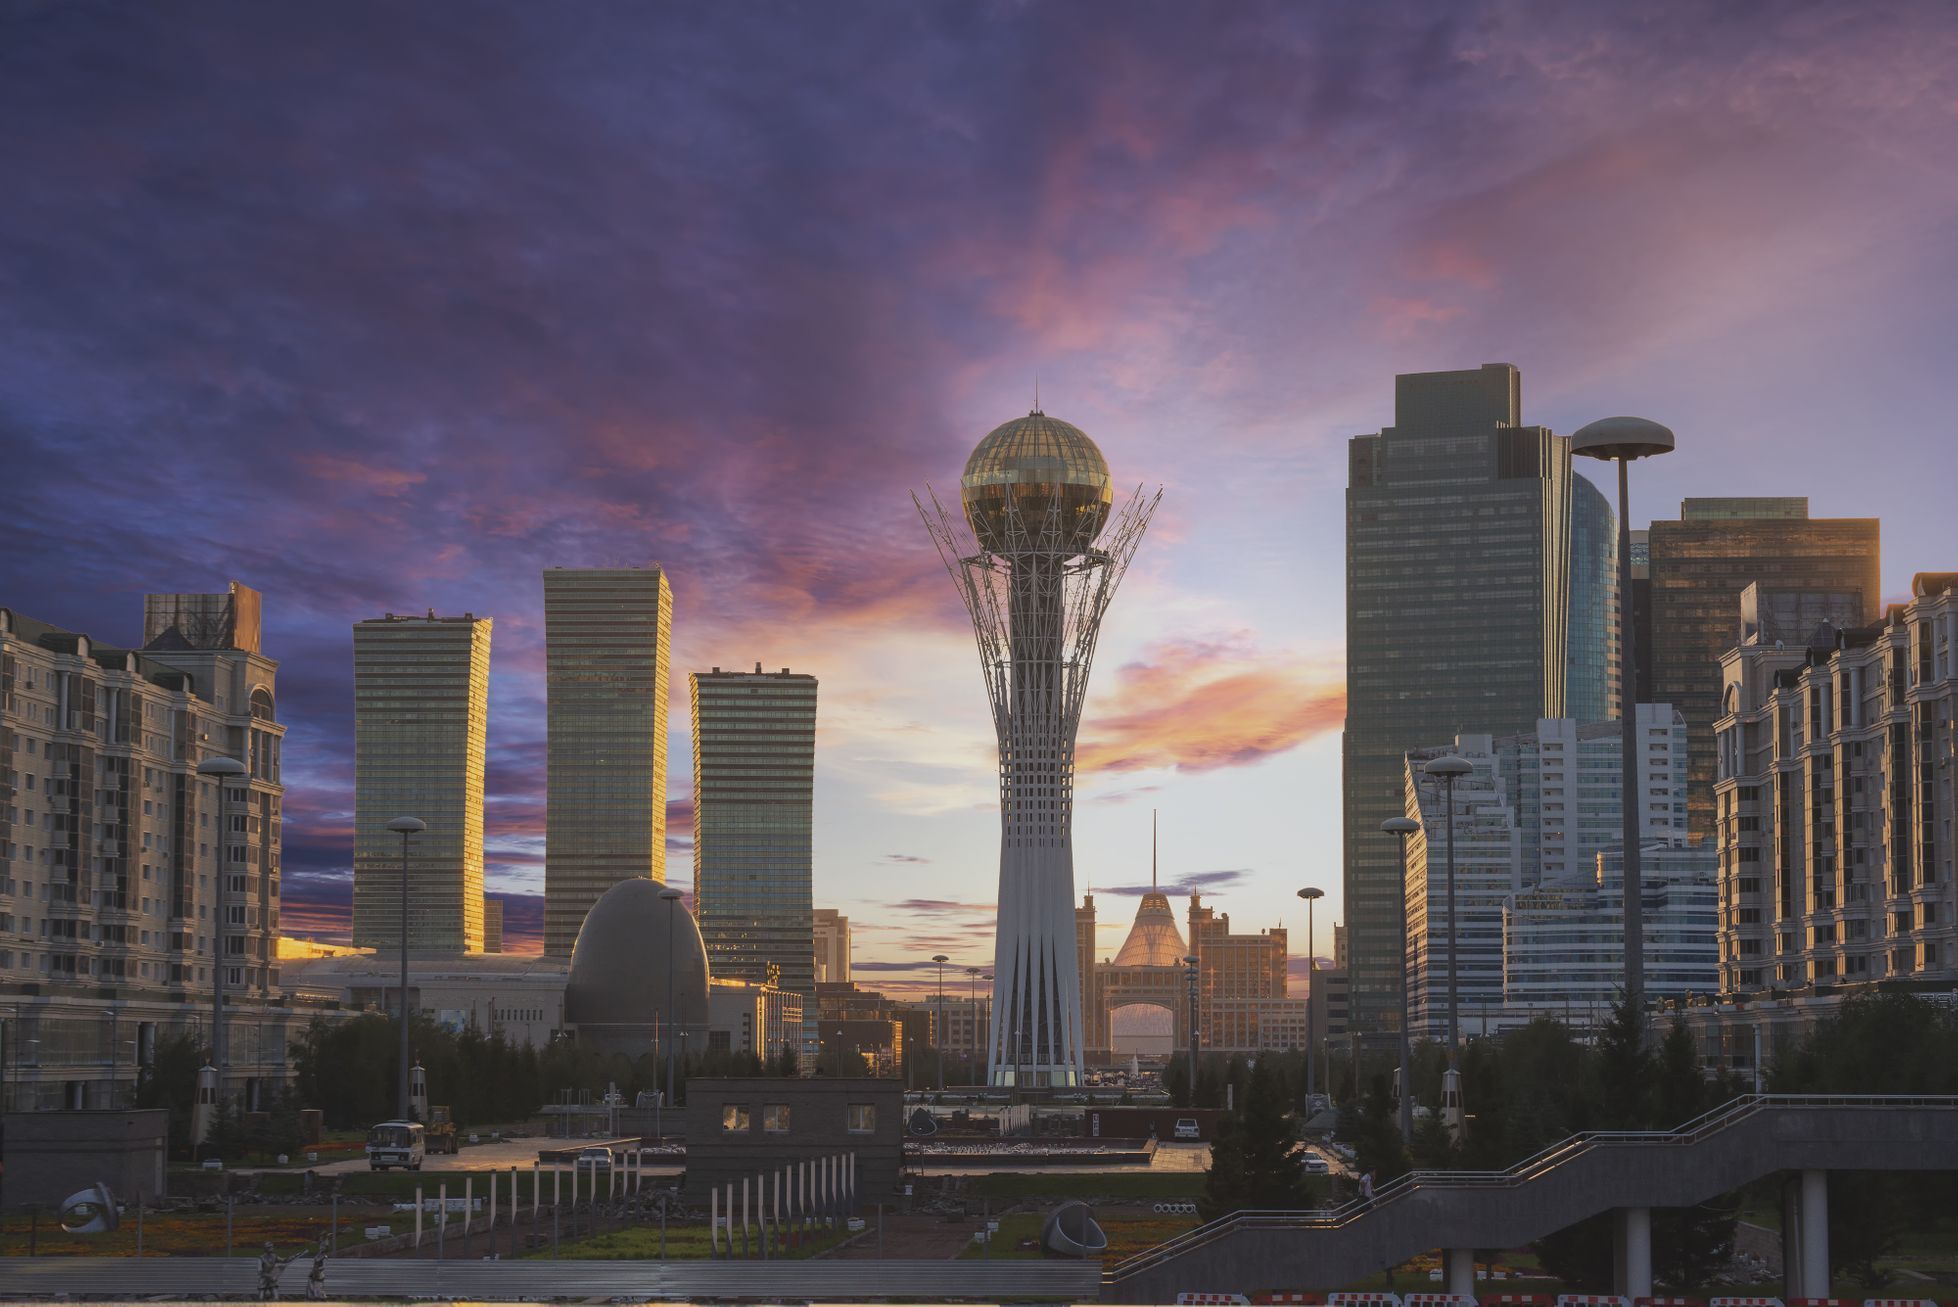 Fotogalerie / Metropole Astana / Shutterstock